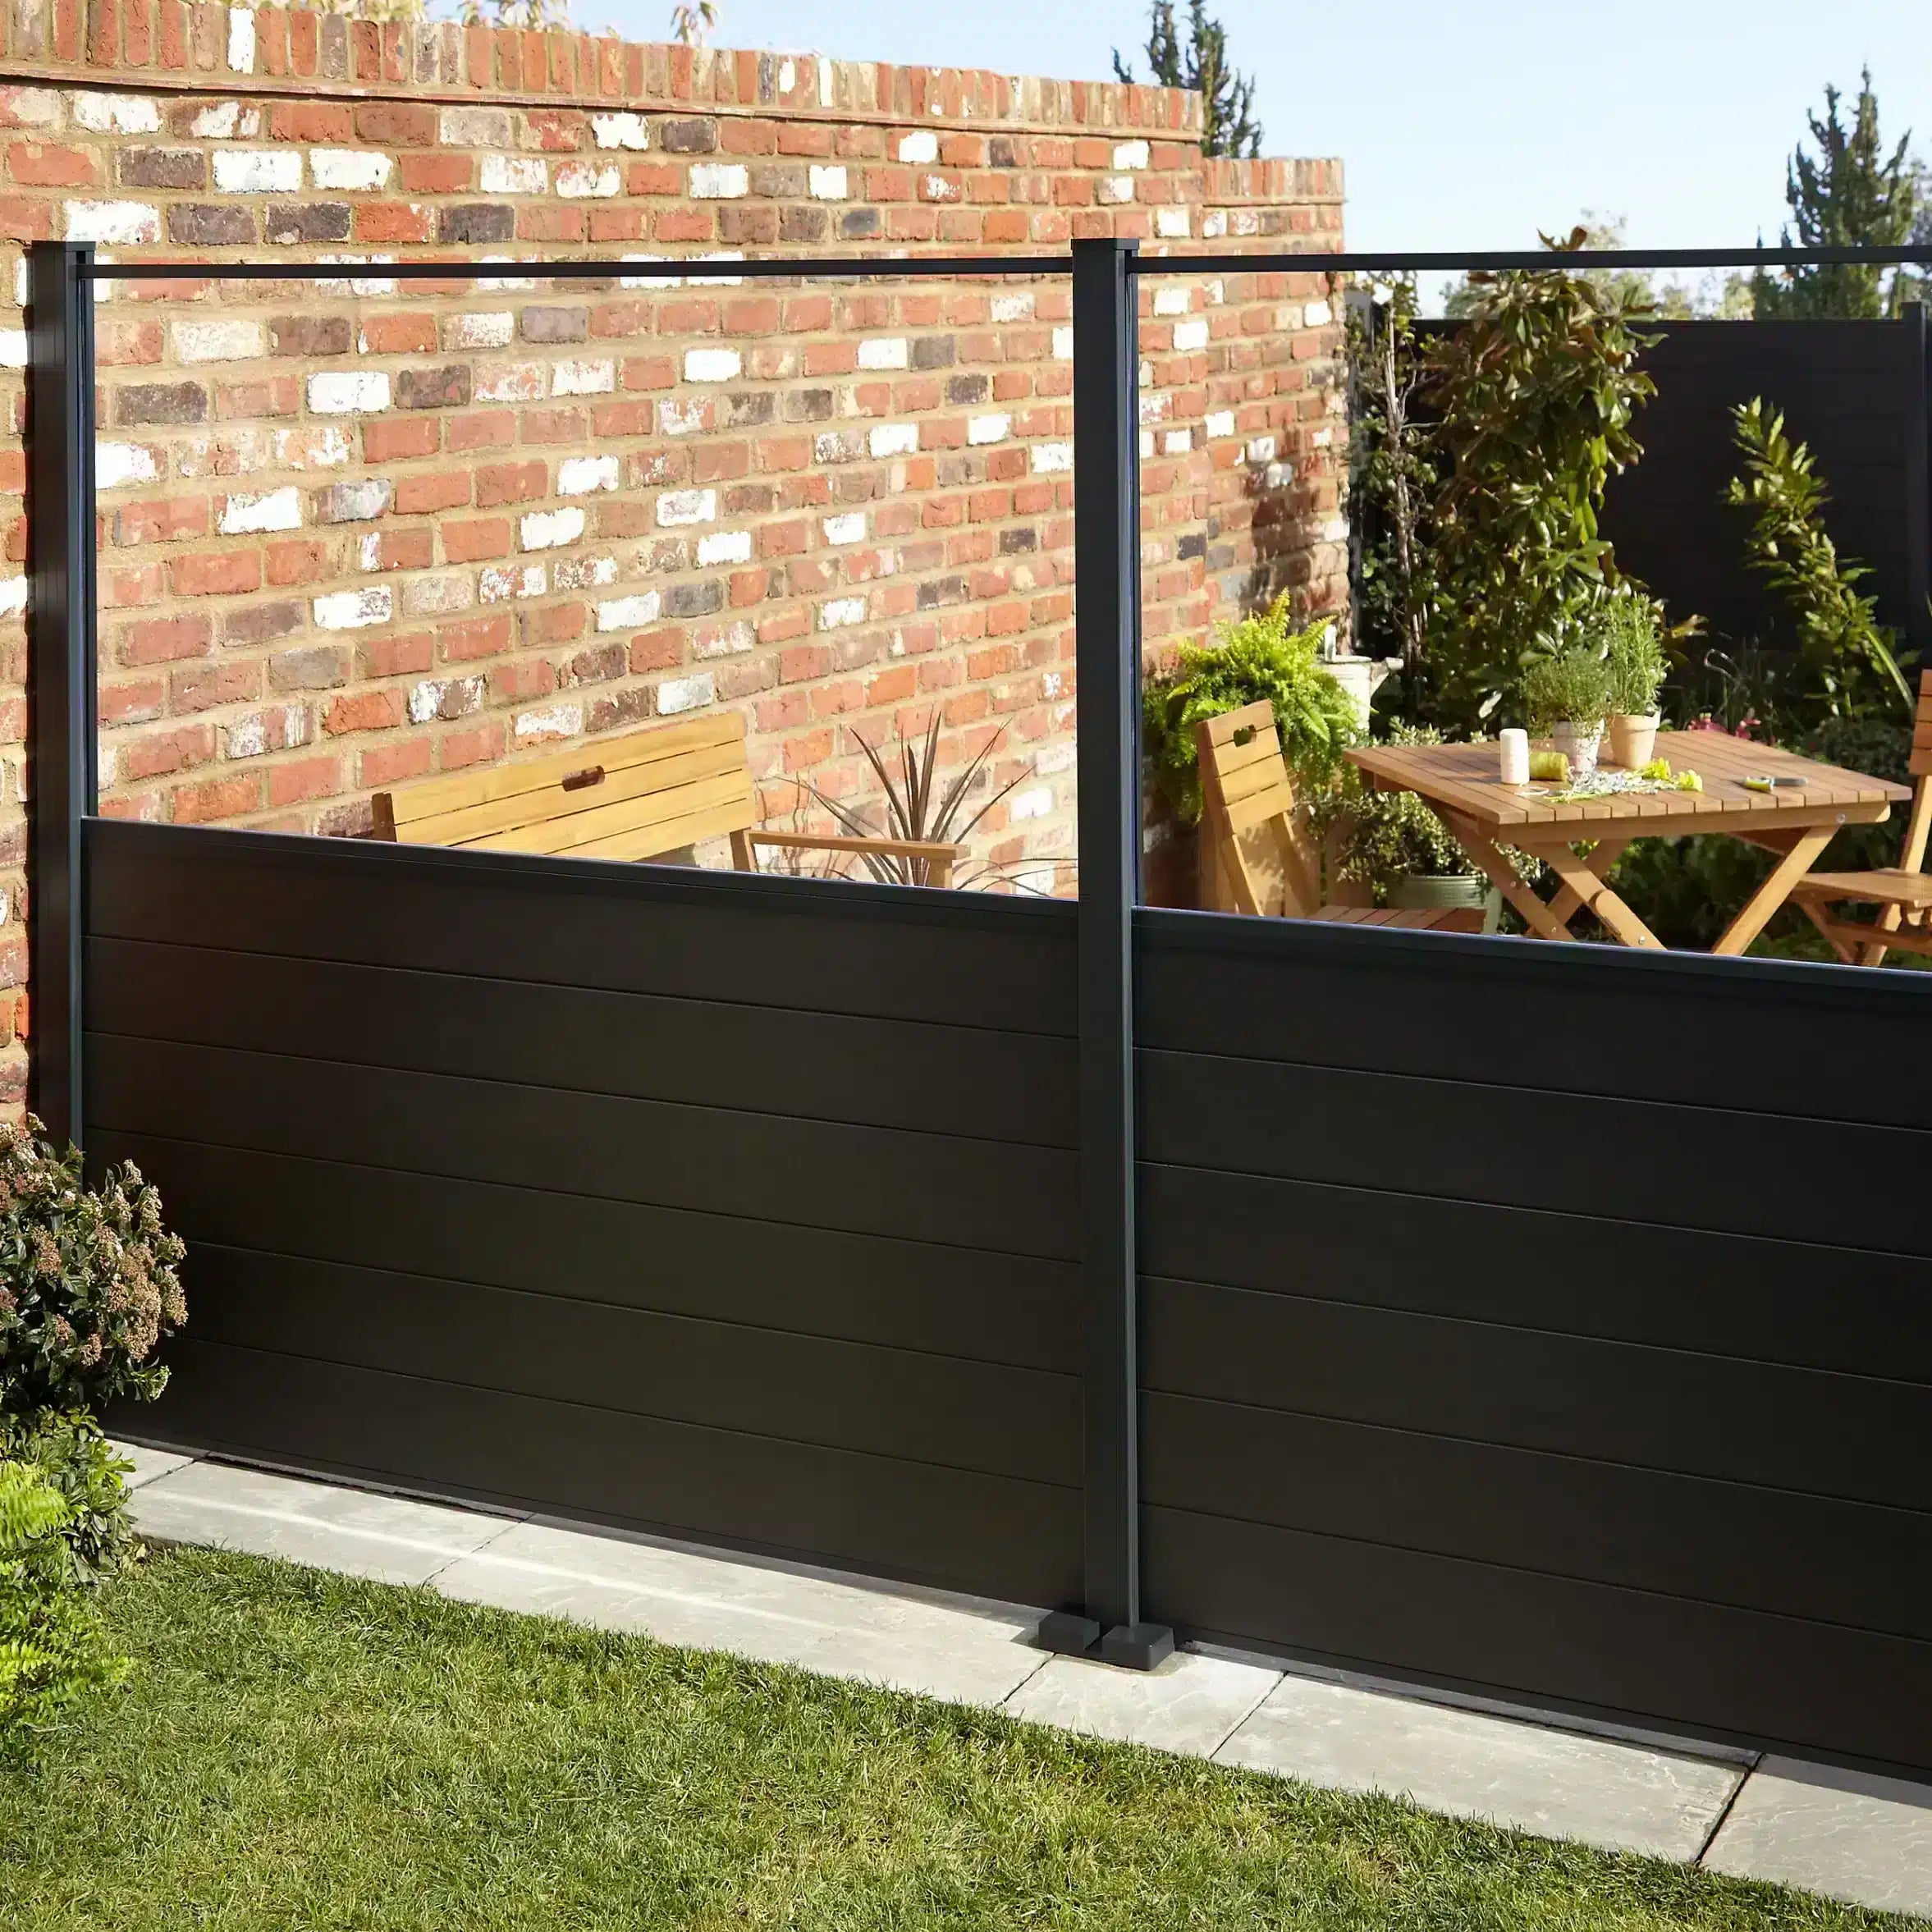 GoodHome Neva Steel Slotted Fence post (H)1.83m (W)70mm Dark grey 2856